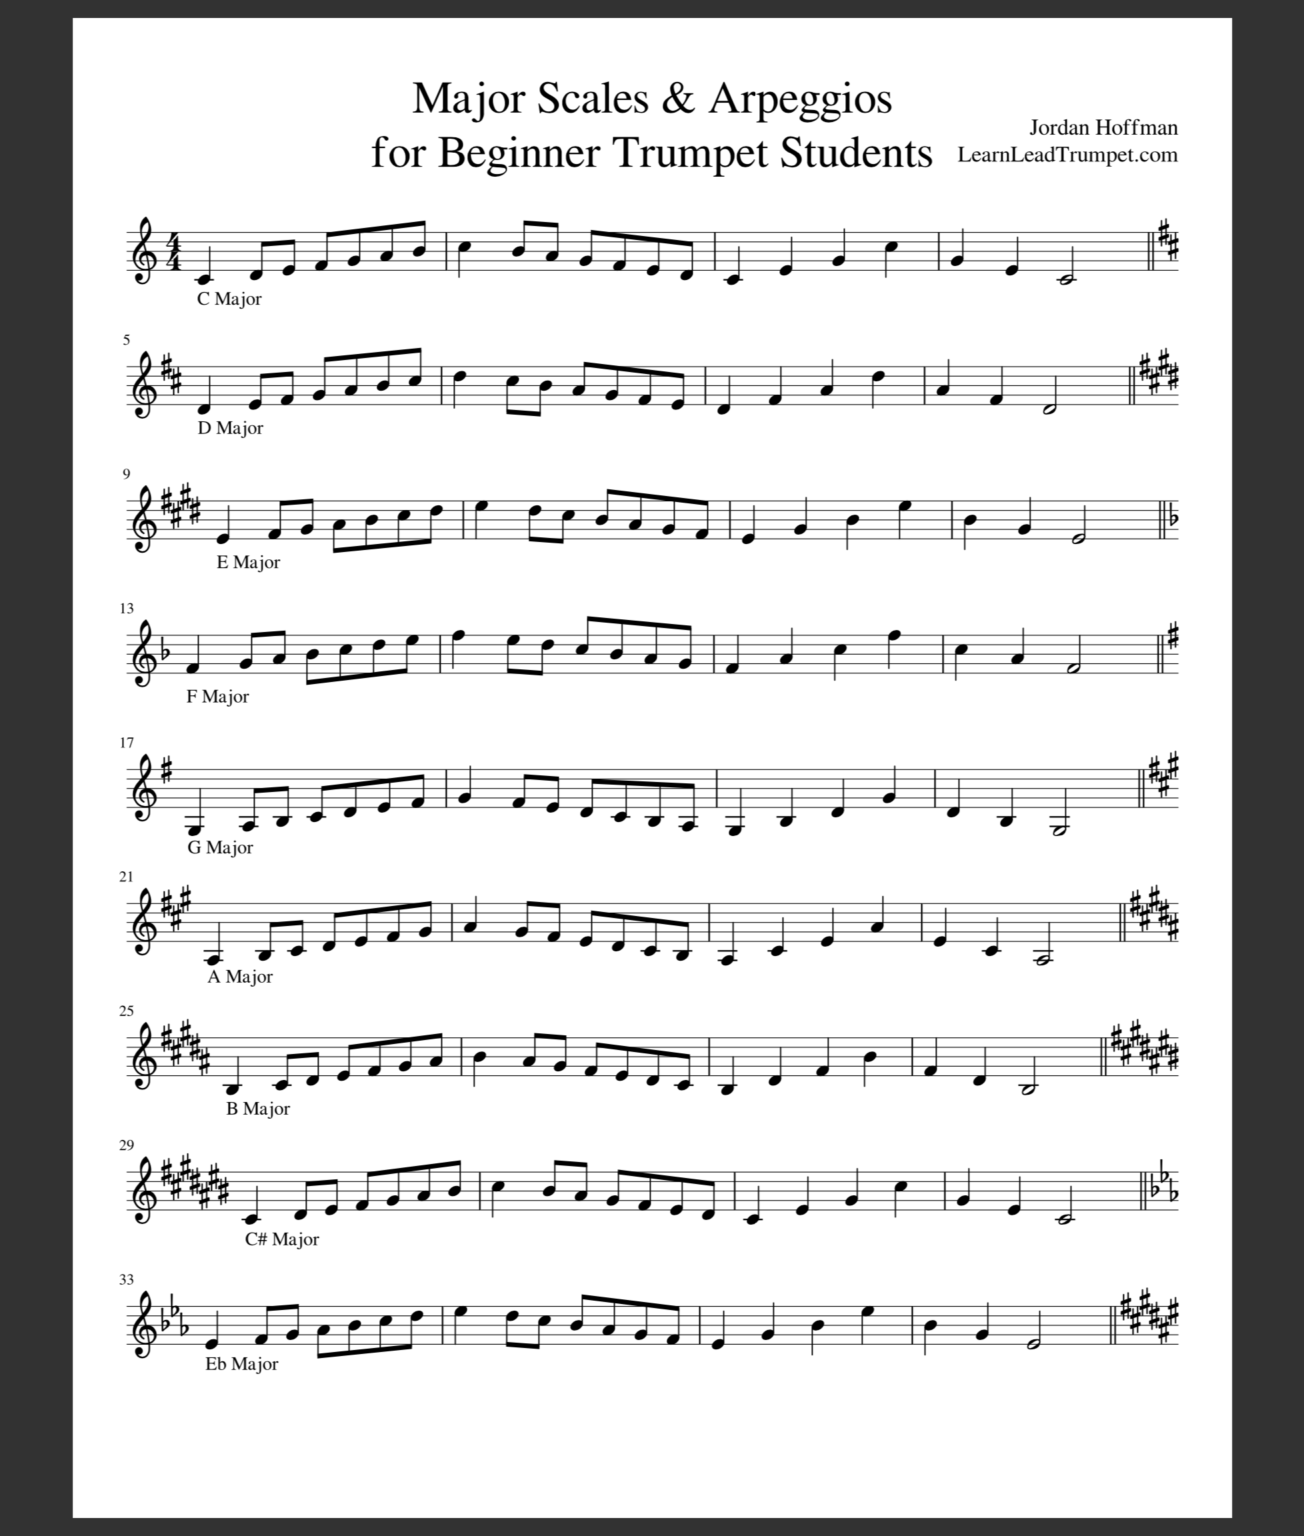 C minor trumpet scale b flat minor scale - lknmcu